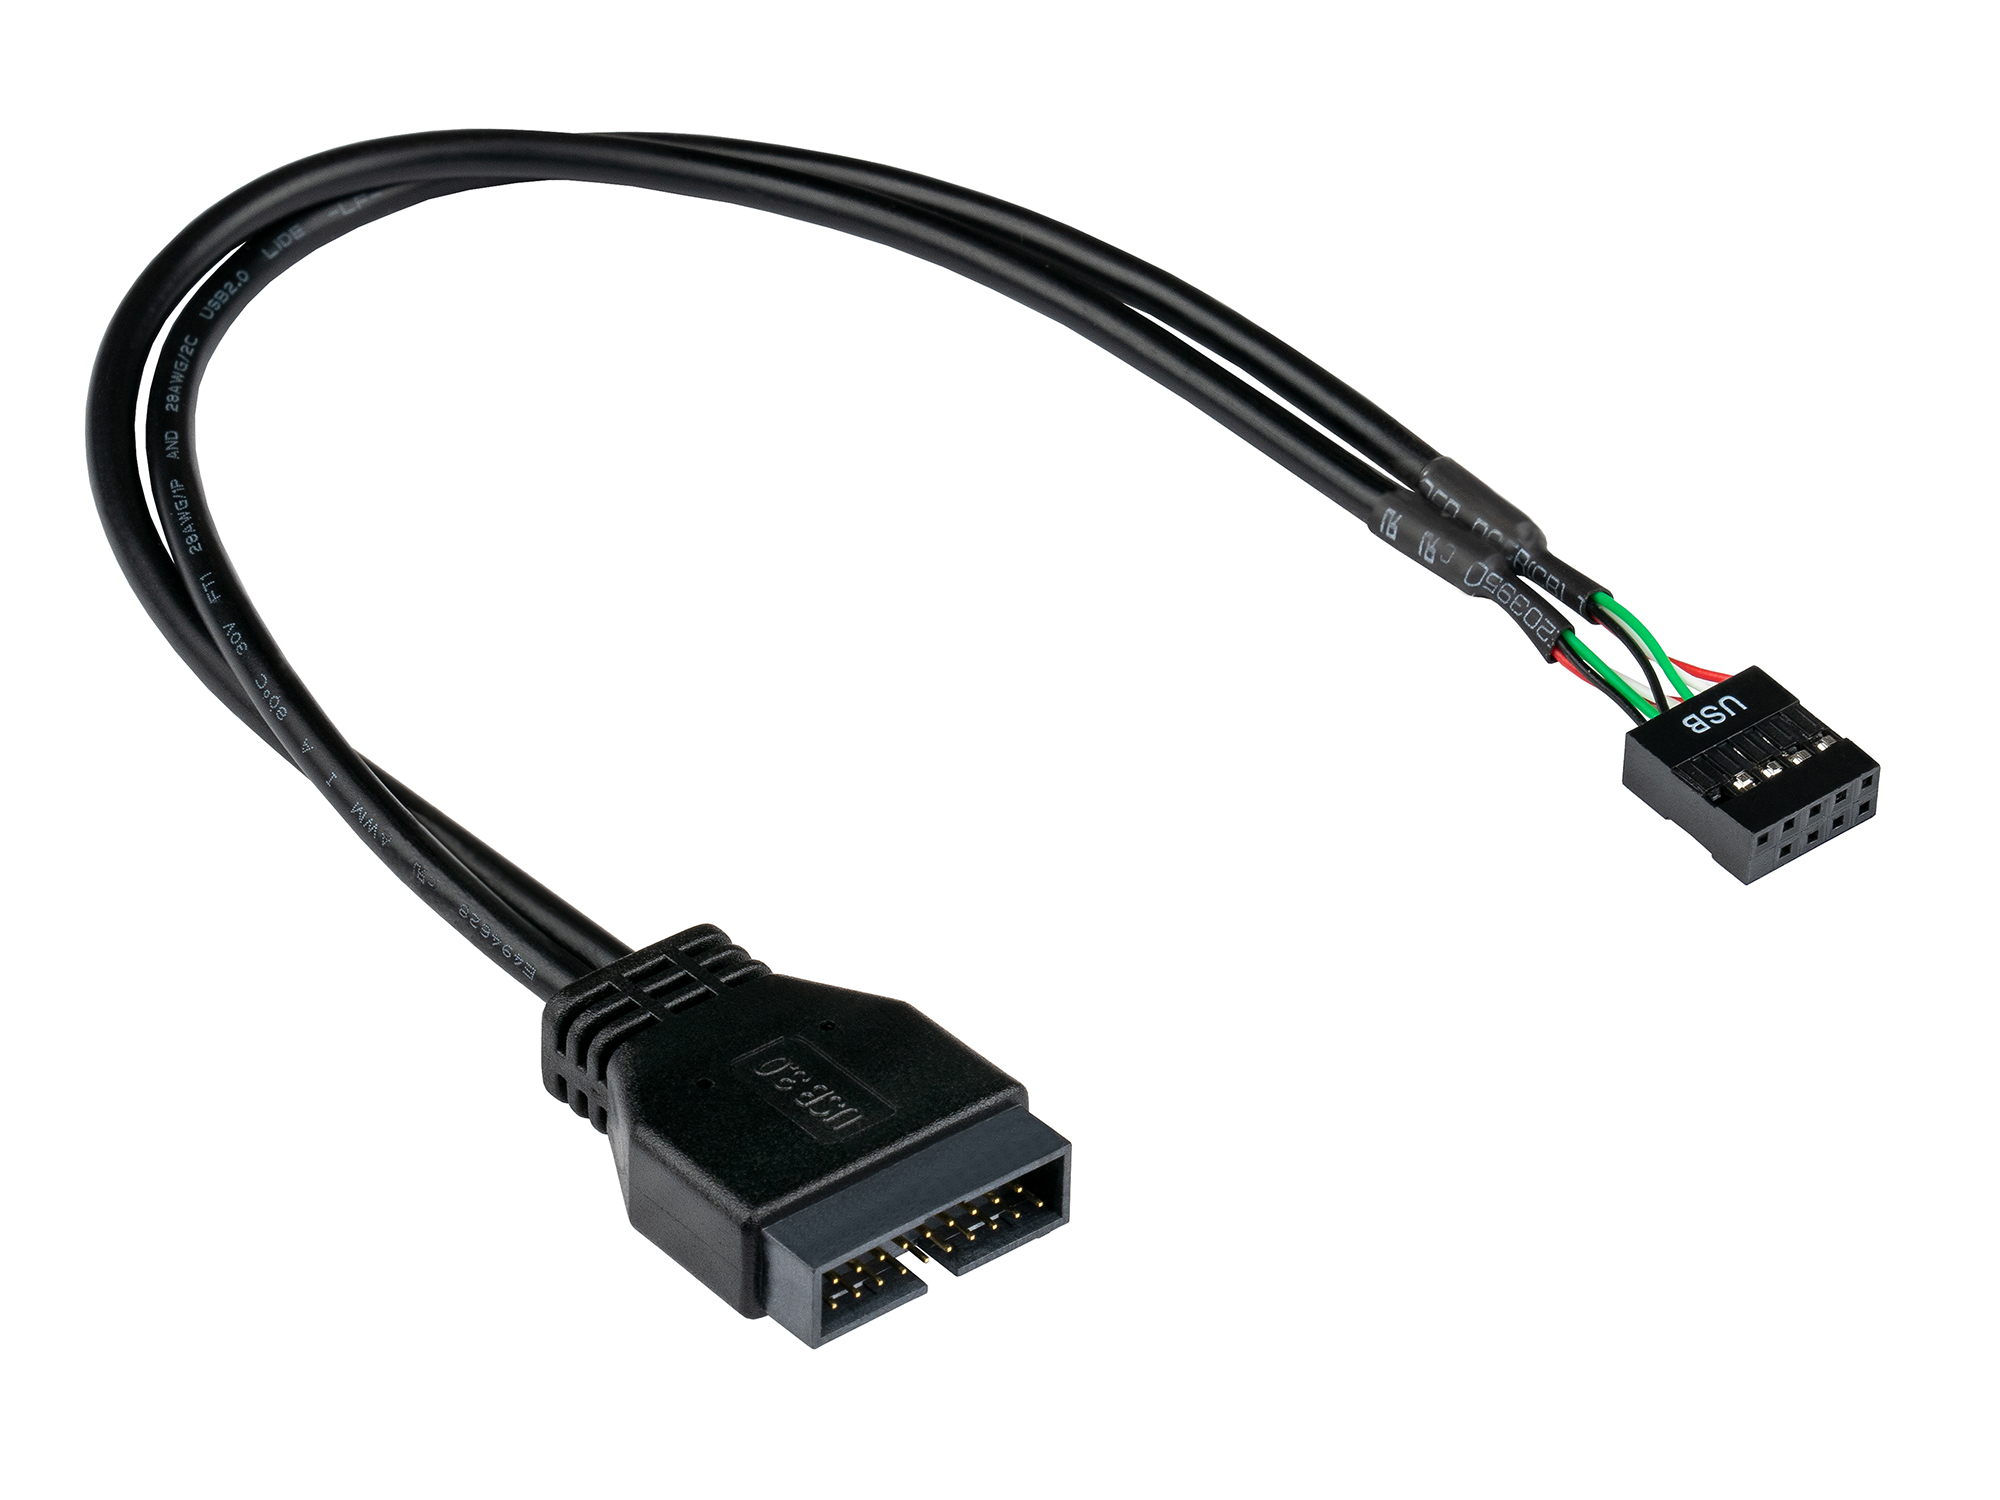 Adapter intern USB 3.0 Pin-Header Stecker an USB 2.0 Pin-Header Buchse, schwarz, 0,3m, Good Connecti